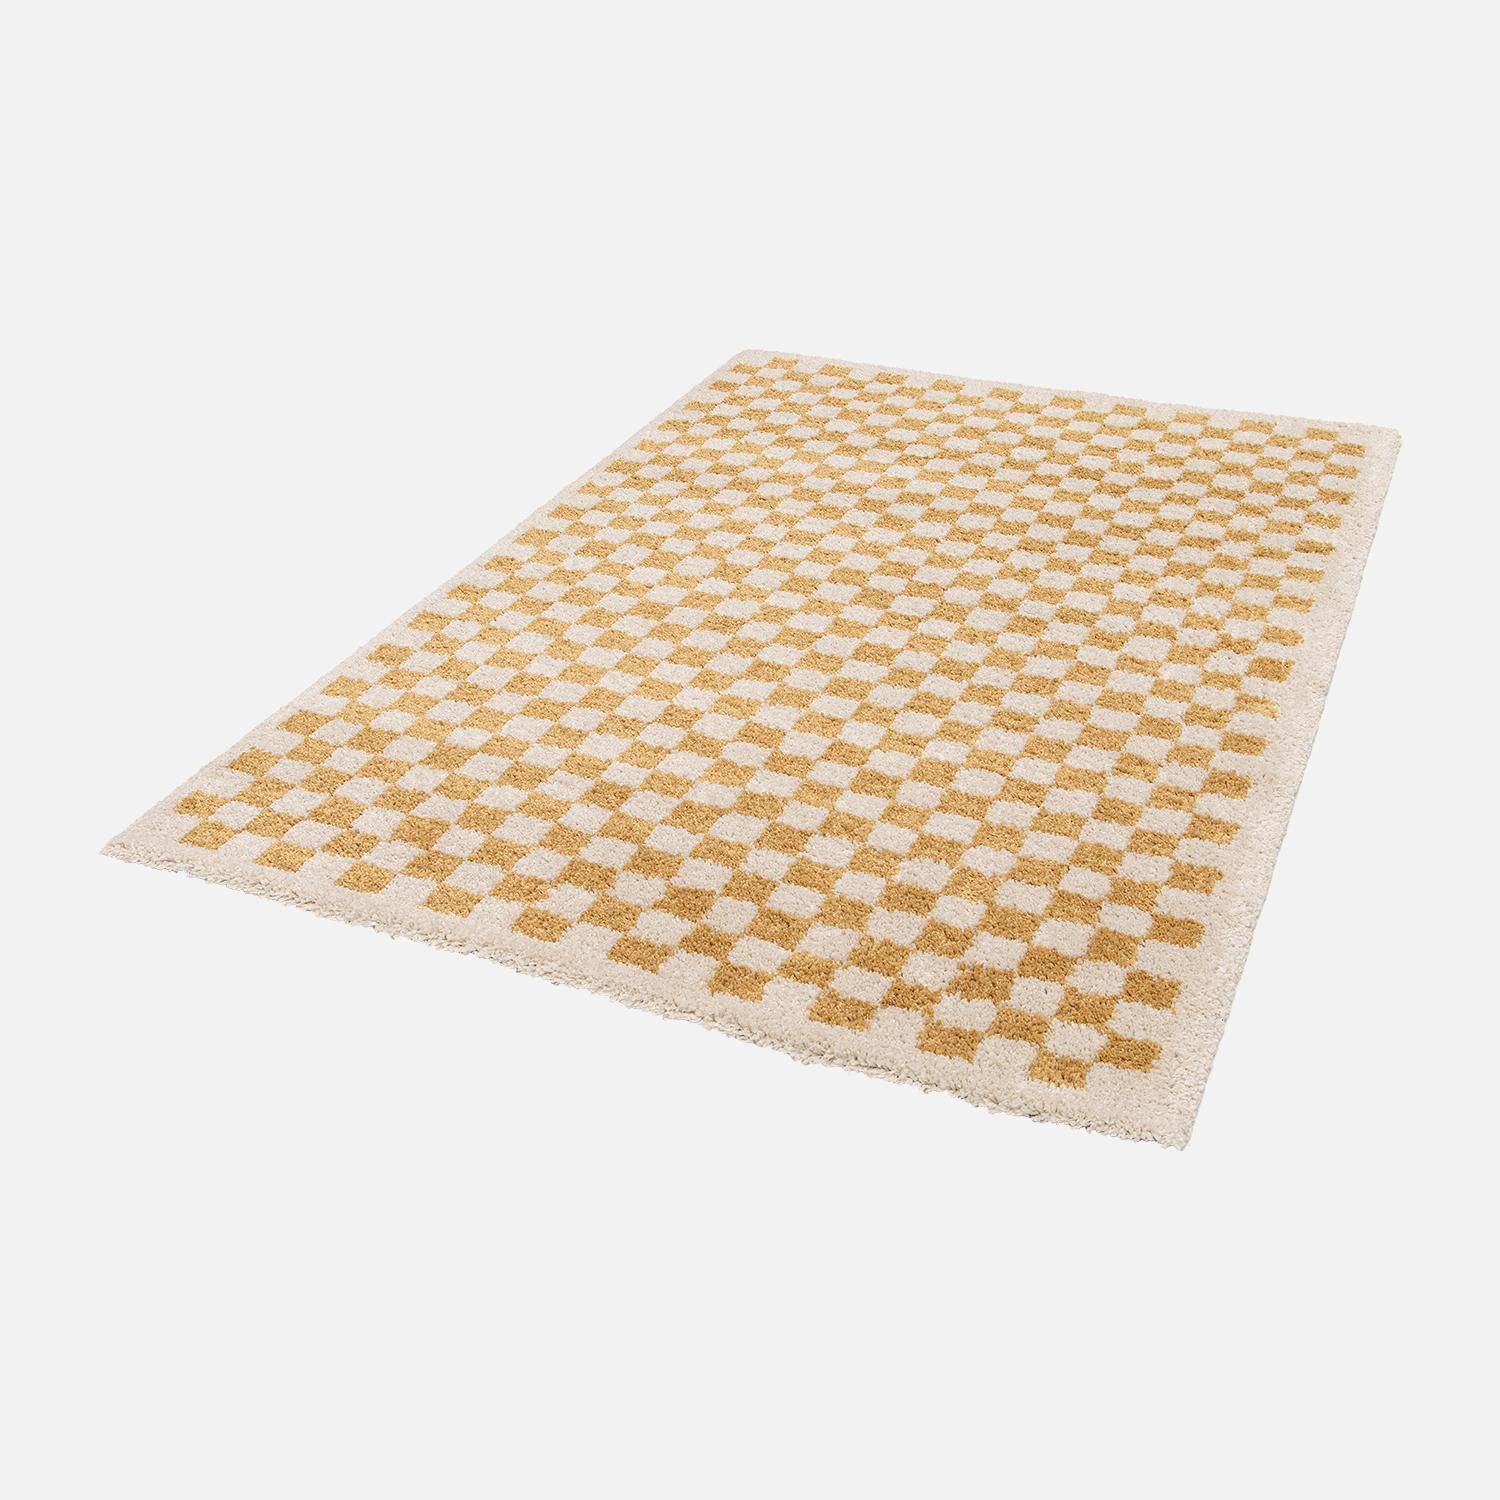 Interior checkerboard carpet in mustard yellow and cream, Taylor, 160 x 230 cm Photo3